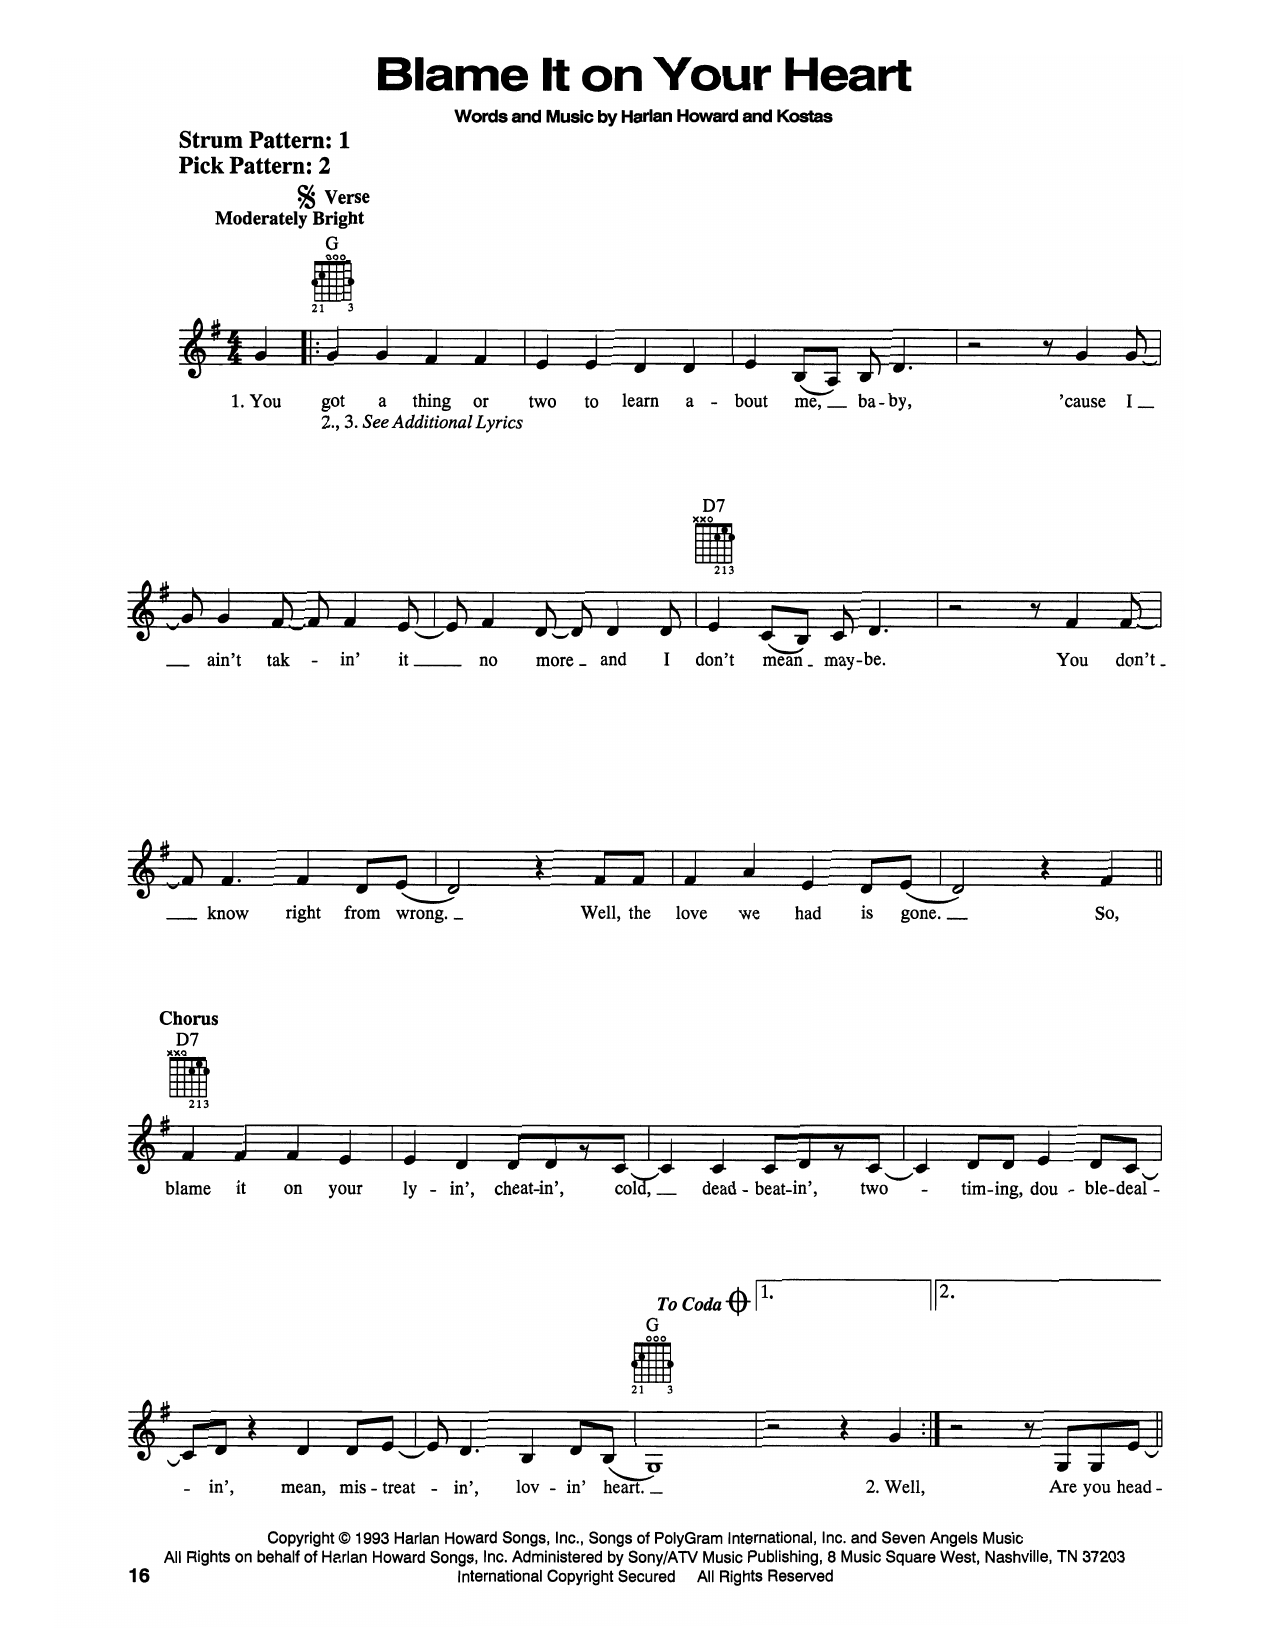 Patty Loveless Blame It On Your Heart sheet music notes printable PDF score